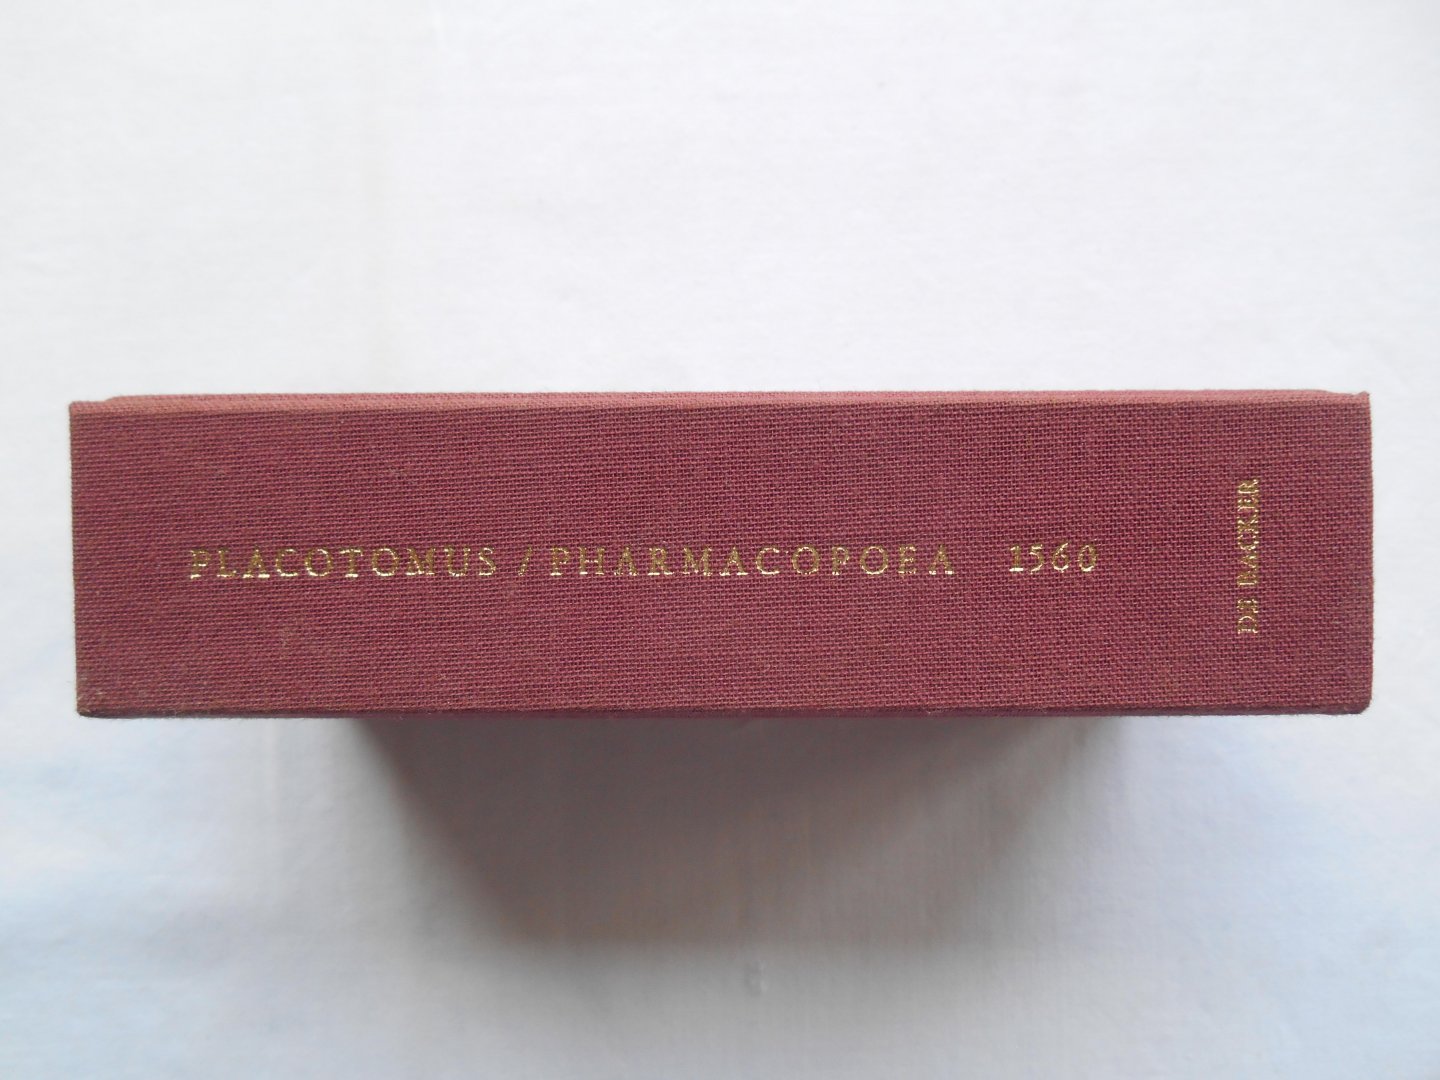 Placotomus, Iohannes (Johannes) - Pharmacopoea (Antwerp - 1560). facsimile, reprint.